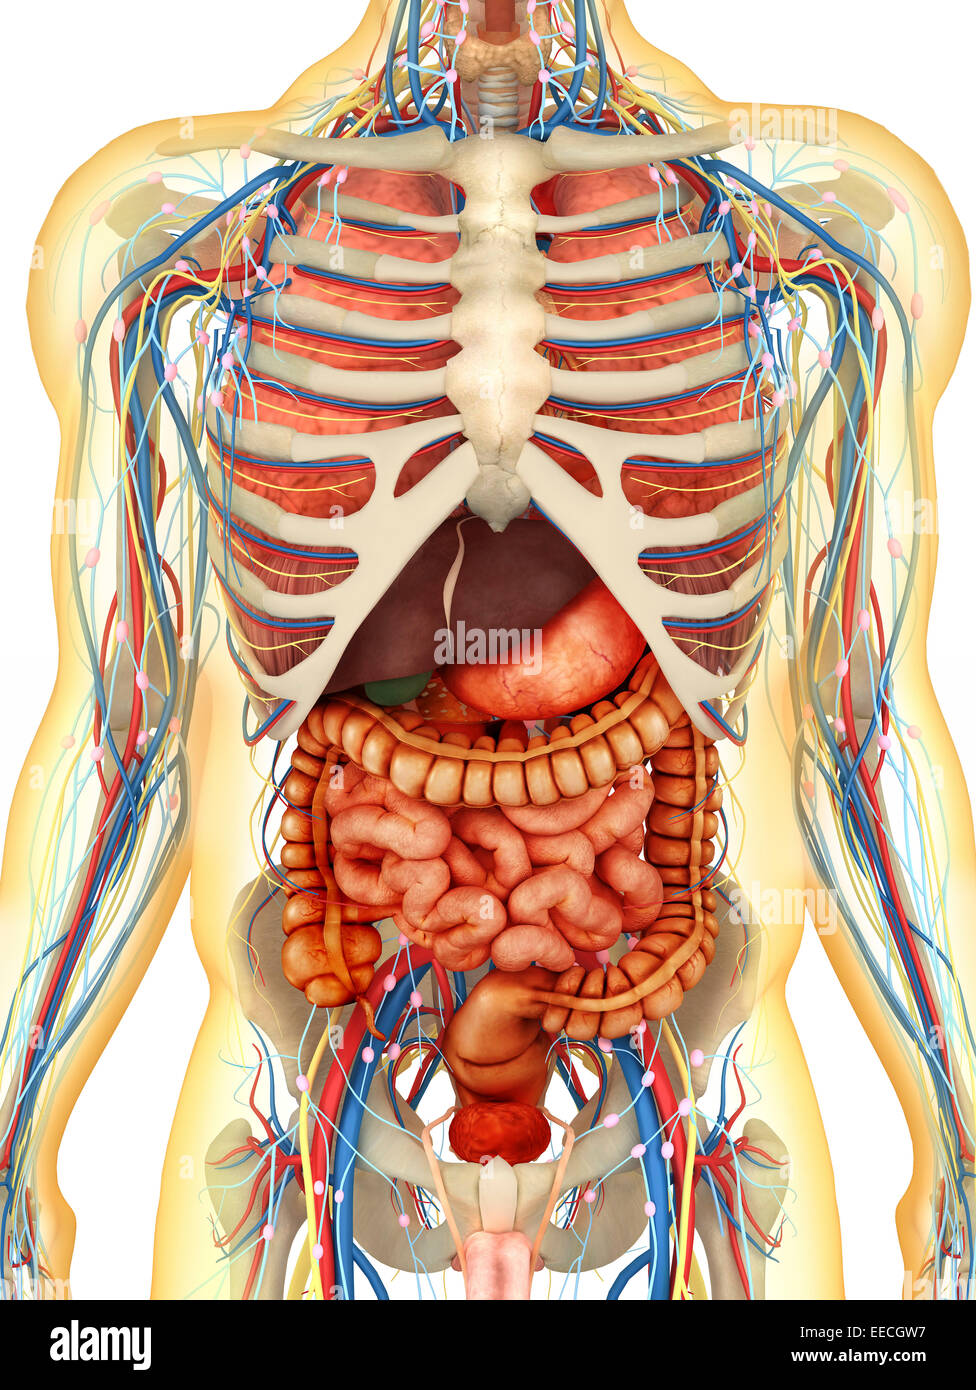 Image Showing Internal Organs In The Back - Major Internal Organs in